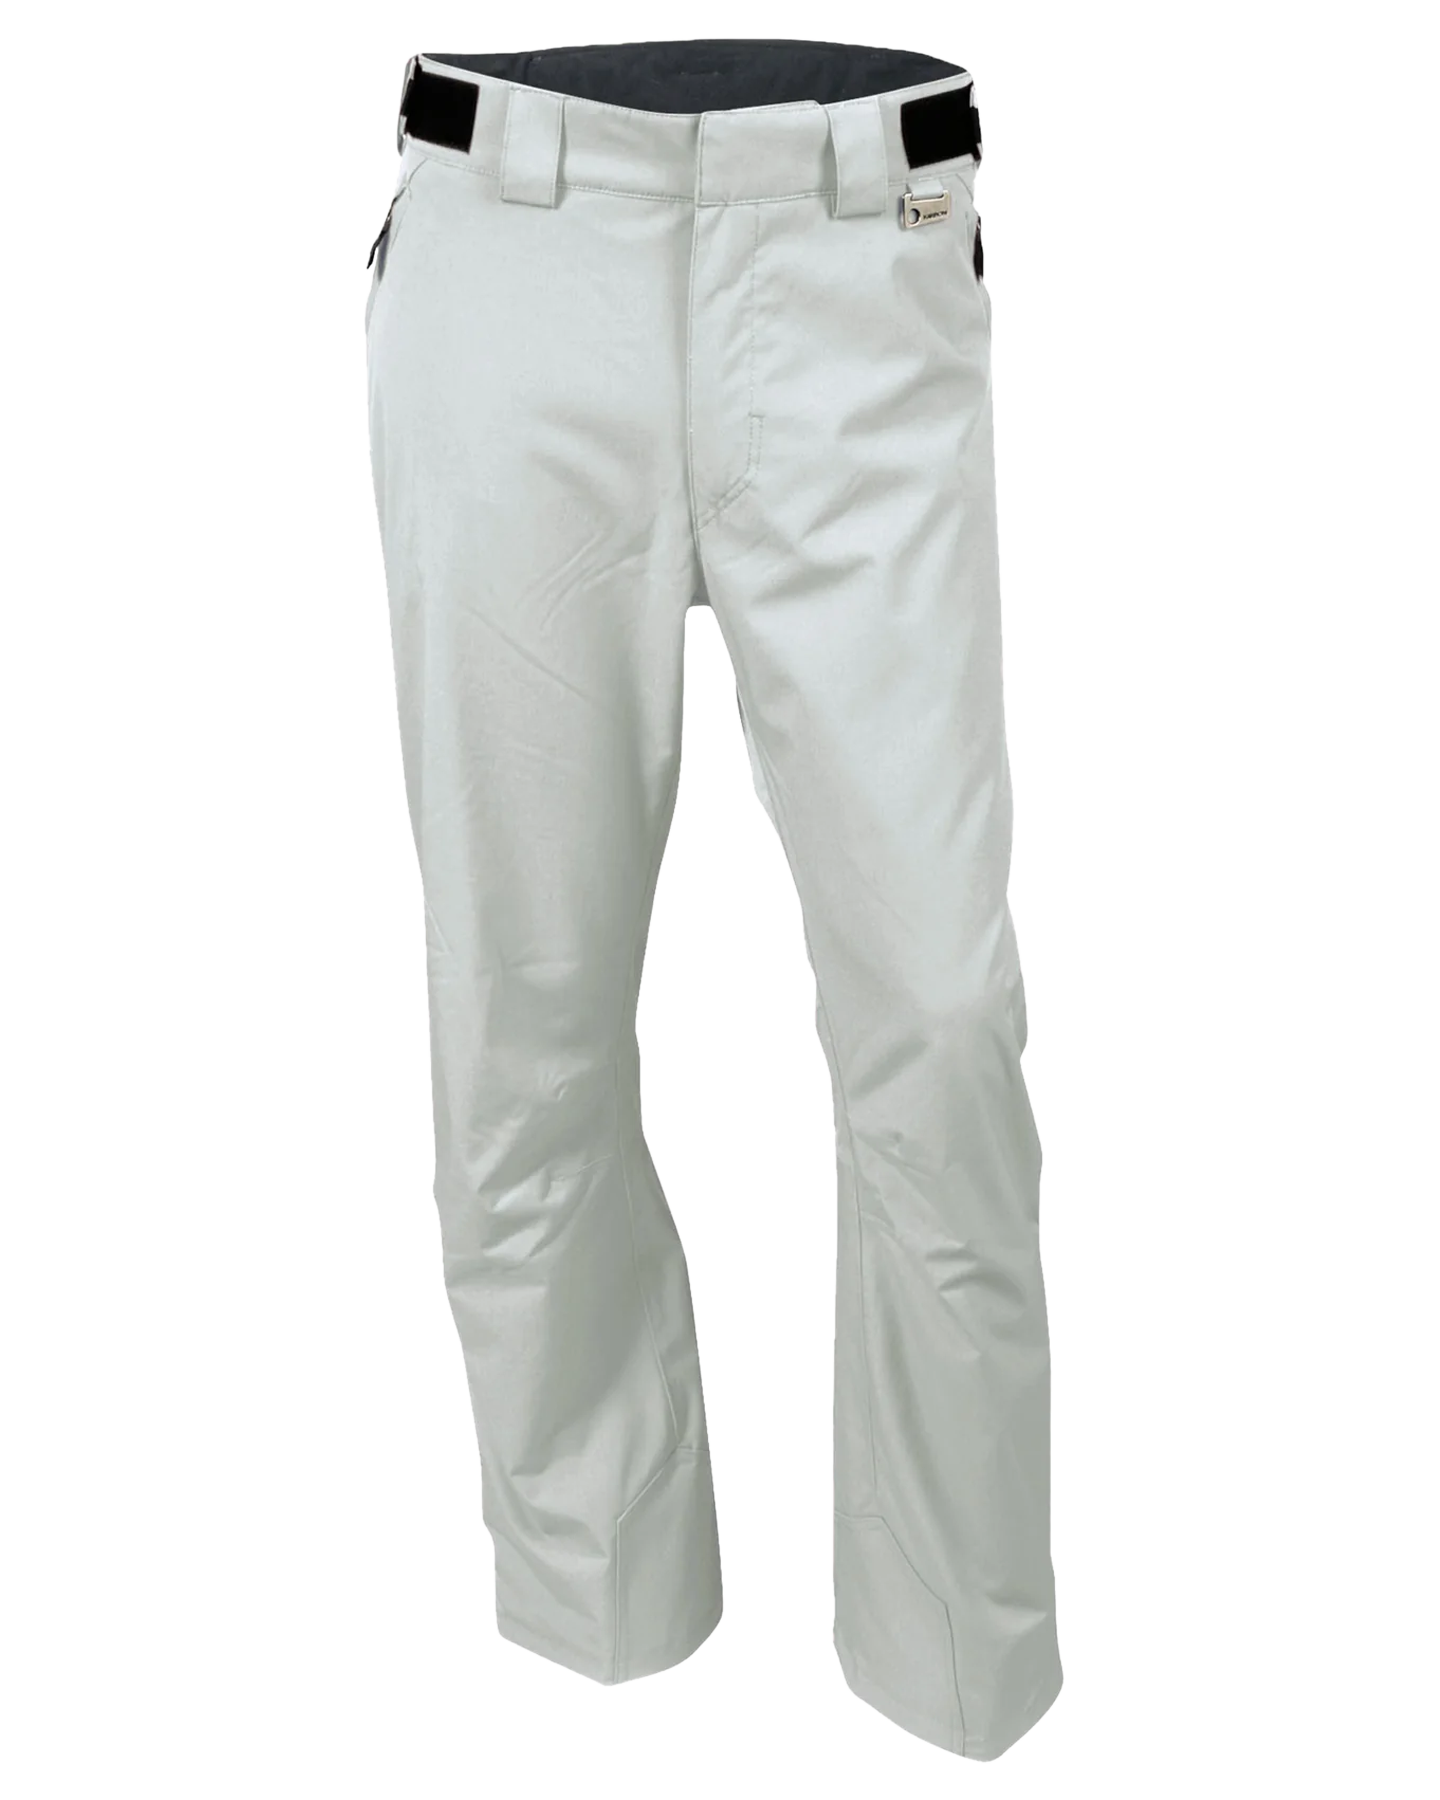 Karbon Silver II Short Graphite Alpha Snow Pants - Glacier Men's Snow Pants - Trojan Wake Ski Snow